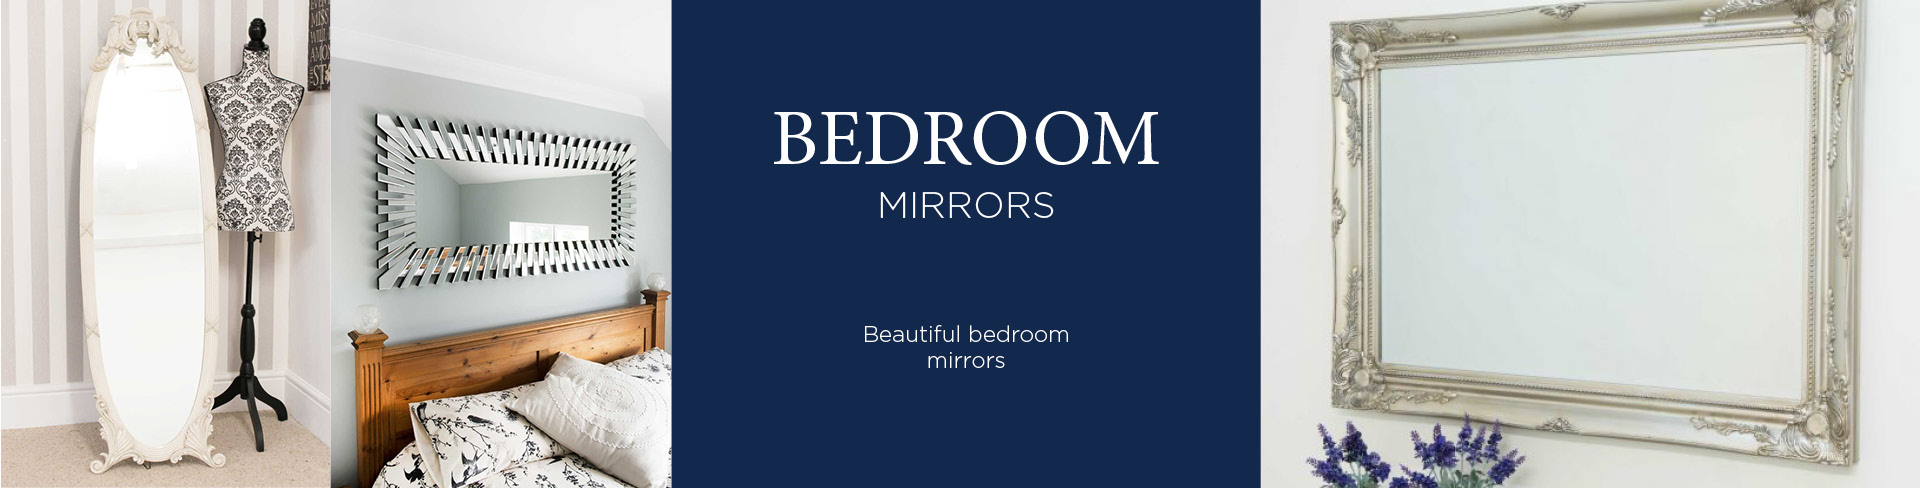 Bedroom Mirror Collection Shop Bedroom Wall Mirrors Online